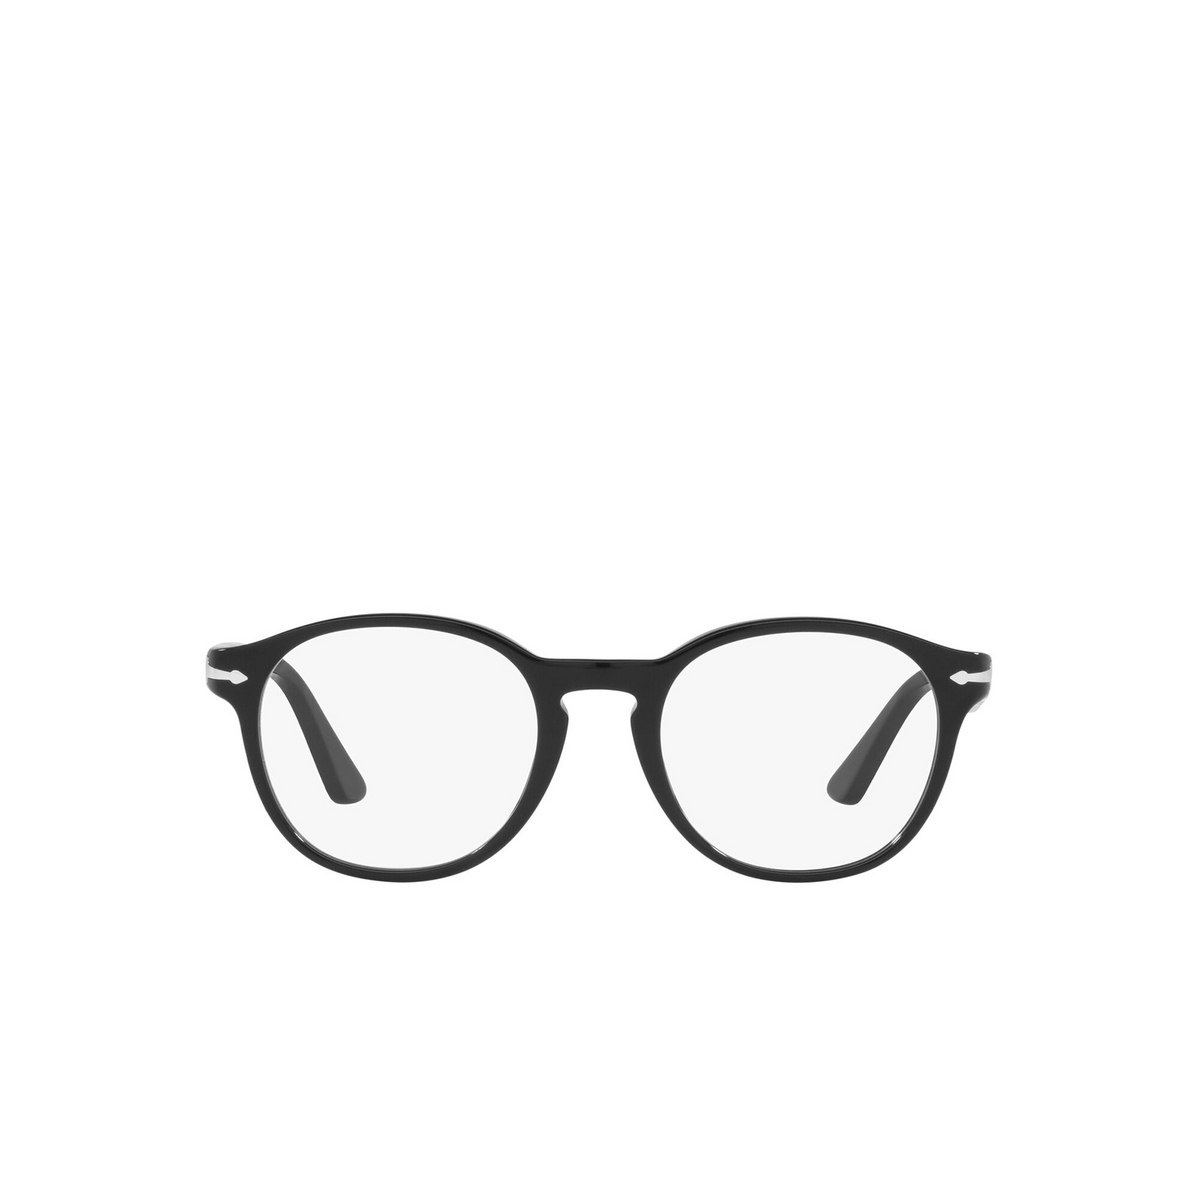 Persol® Round Eyeglasses: PO3284V color Black 95 - front view.